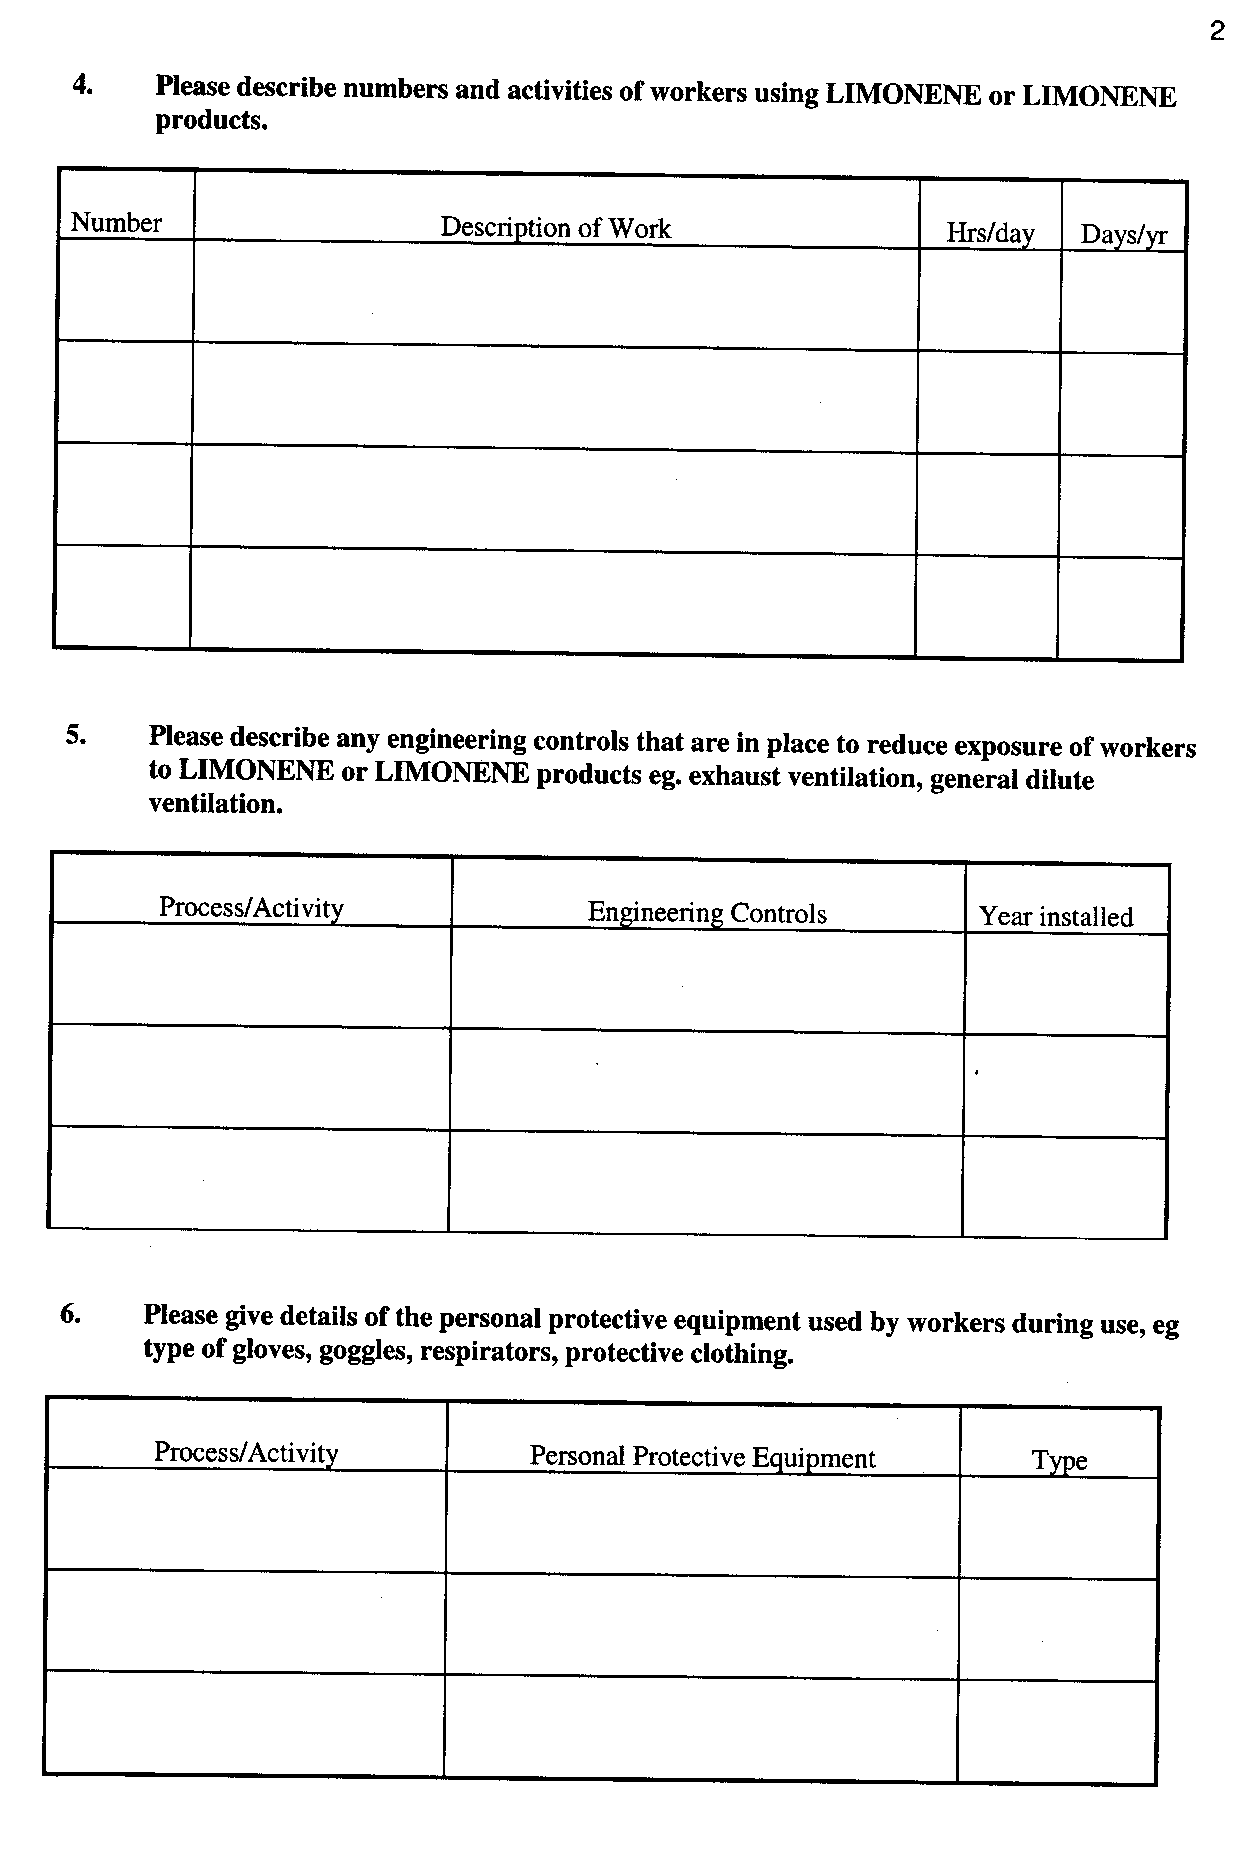 11th page survey